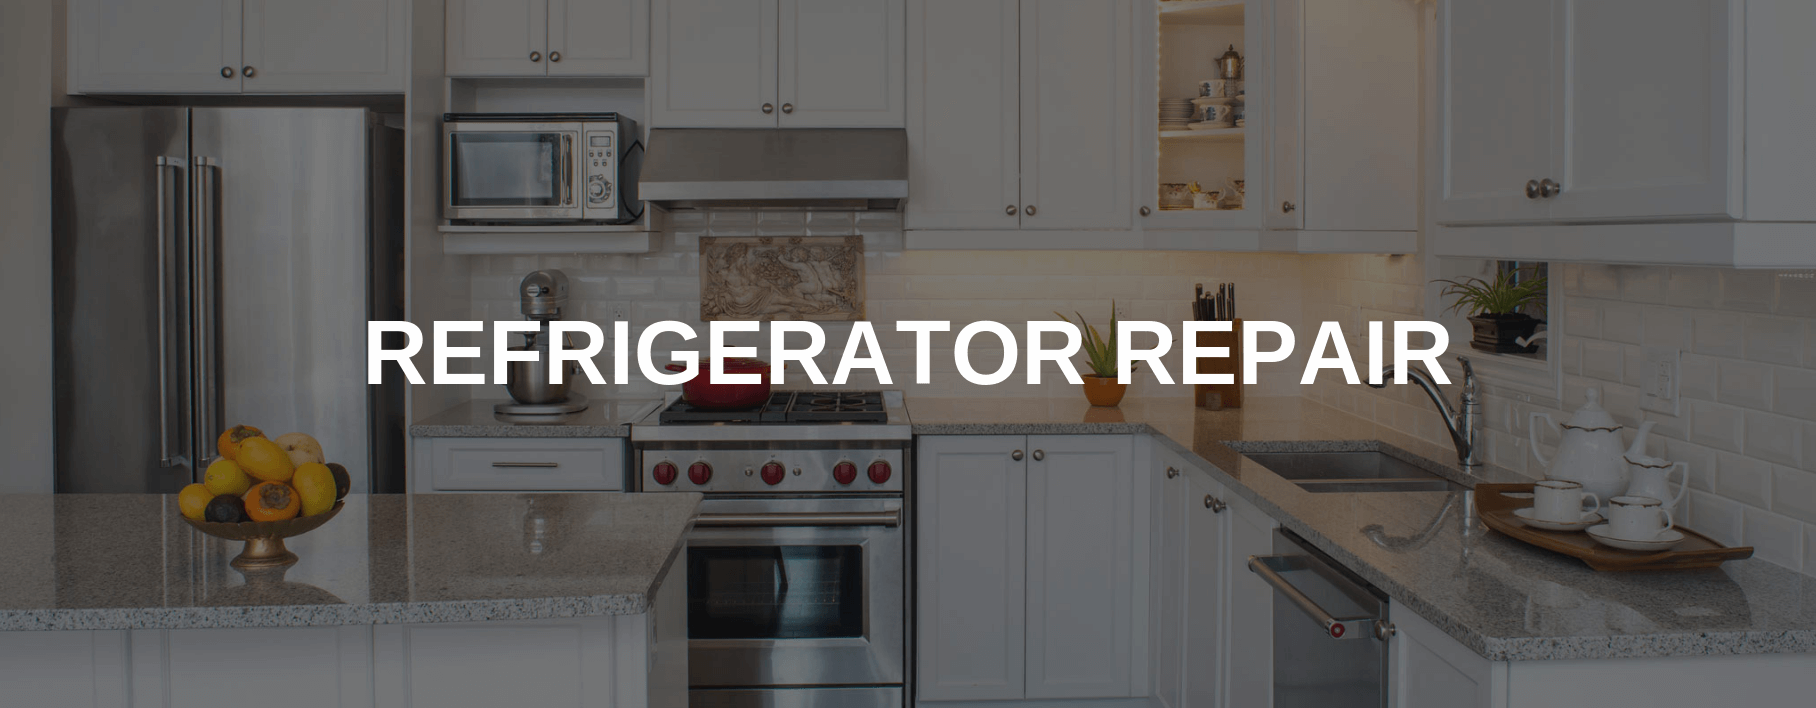 refrigerator repair irvine